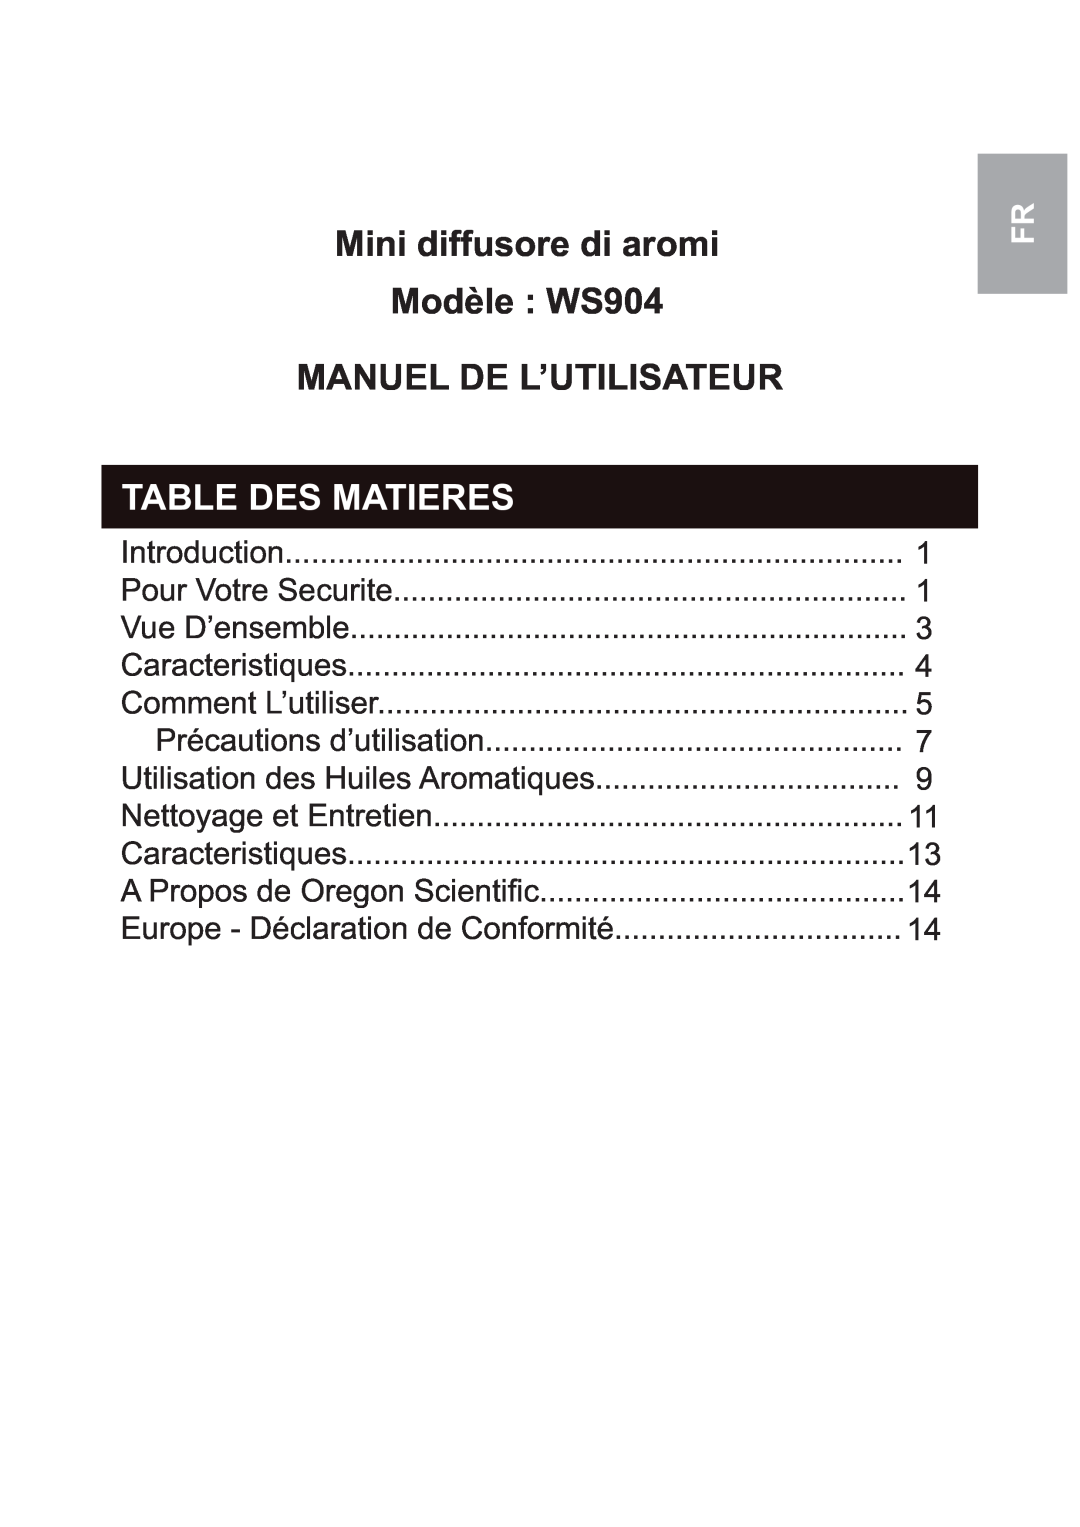 Oregon Scientific user manual Mini diffusore di aromi Modèle : WS904, Manuel De L’Utilisateur, Table Des Matieres 